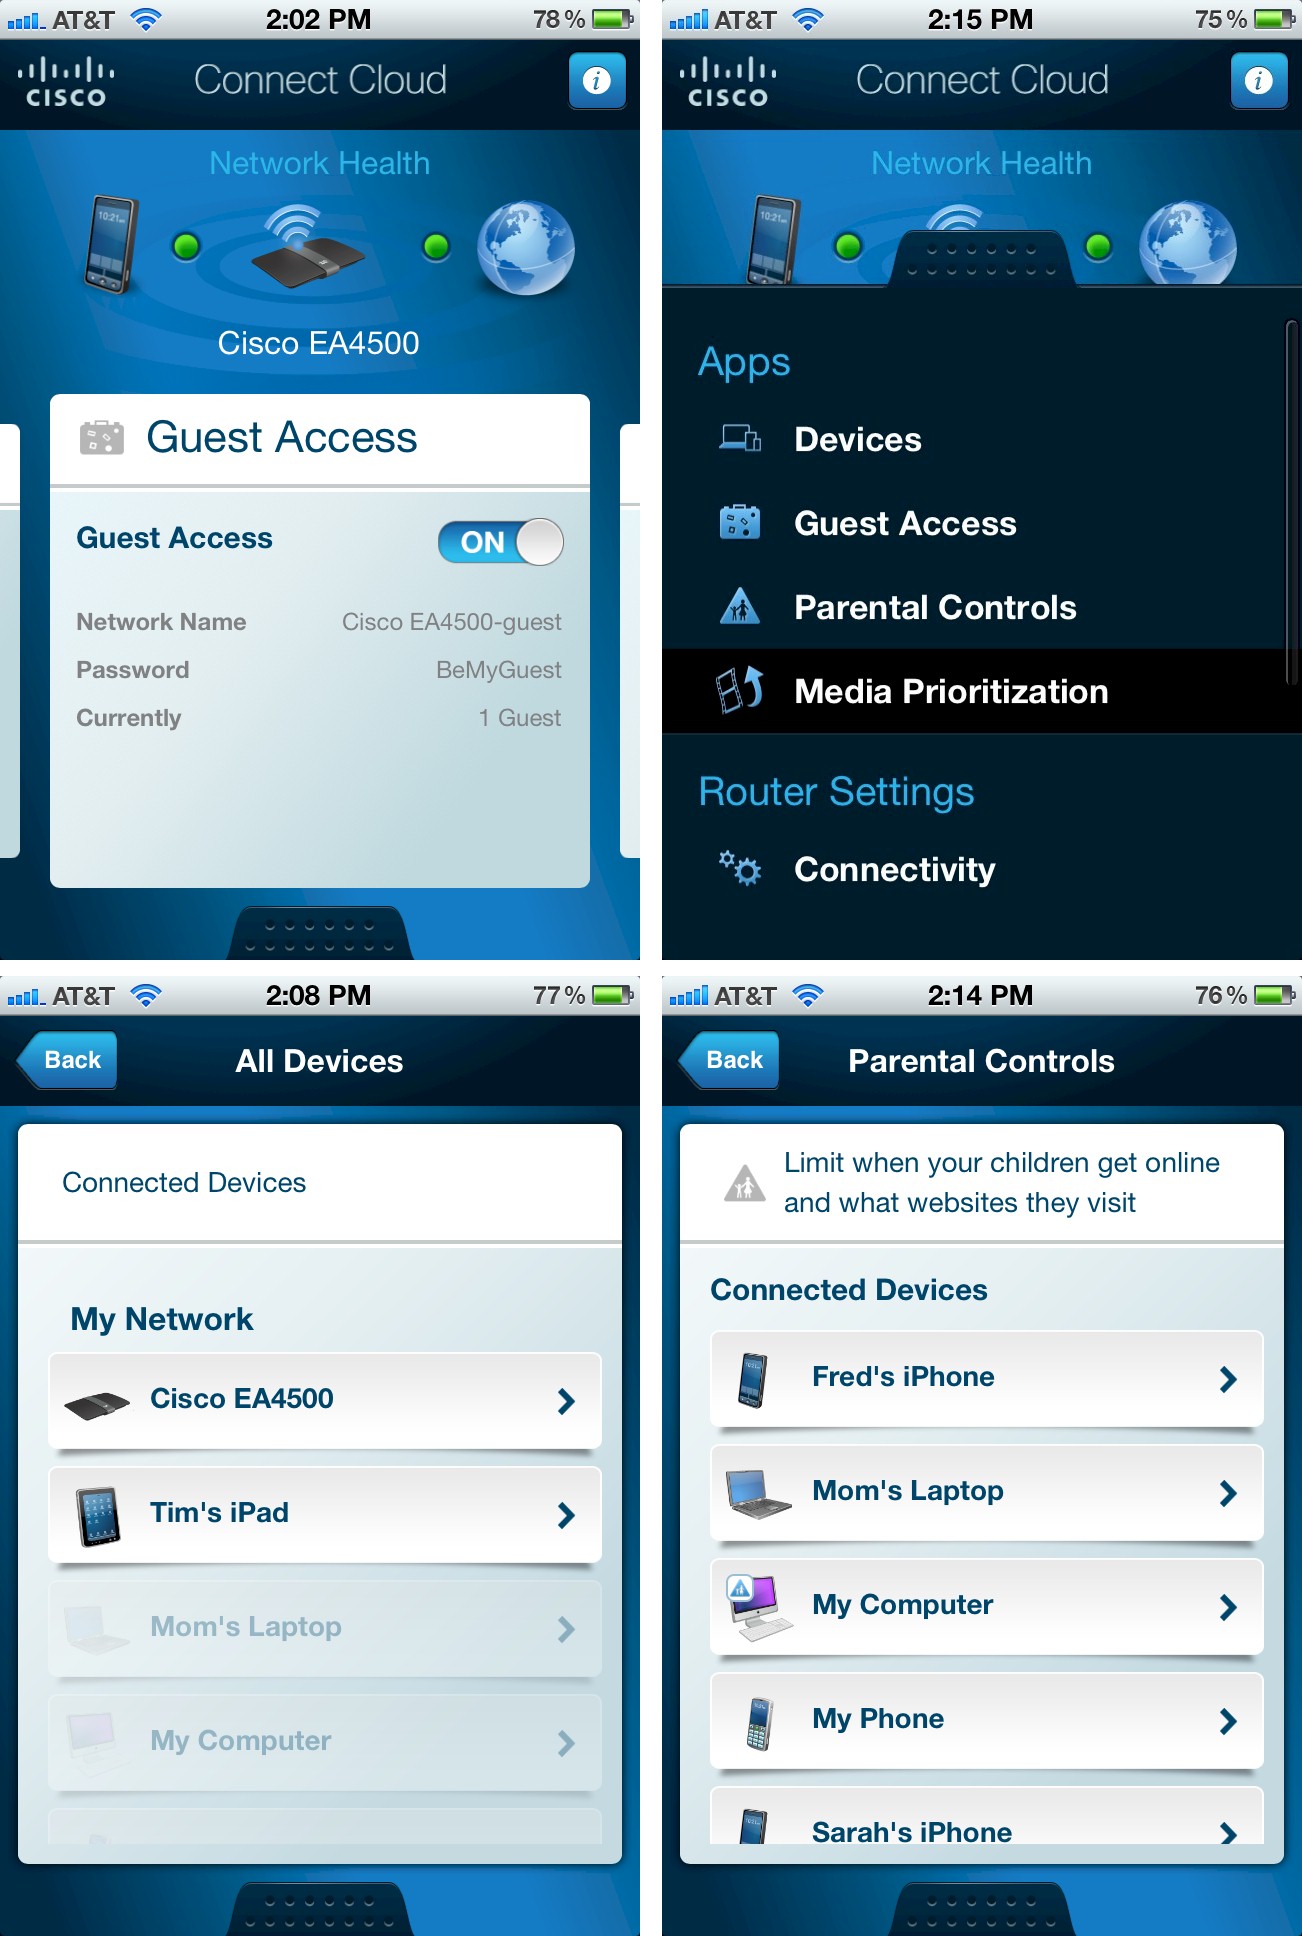 Cisco Connect Cloud iOS app screenshots